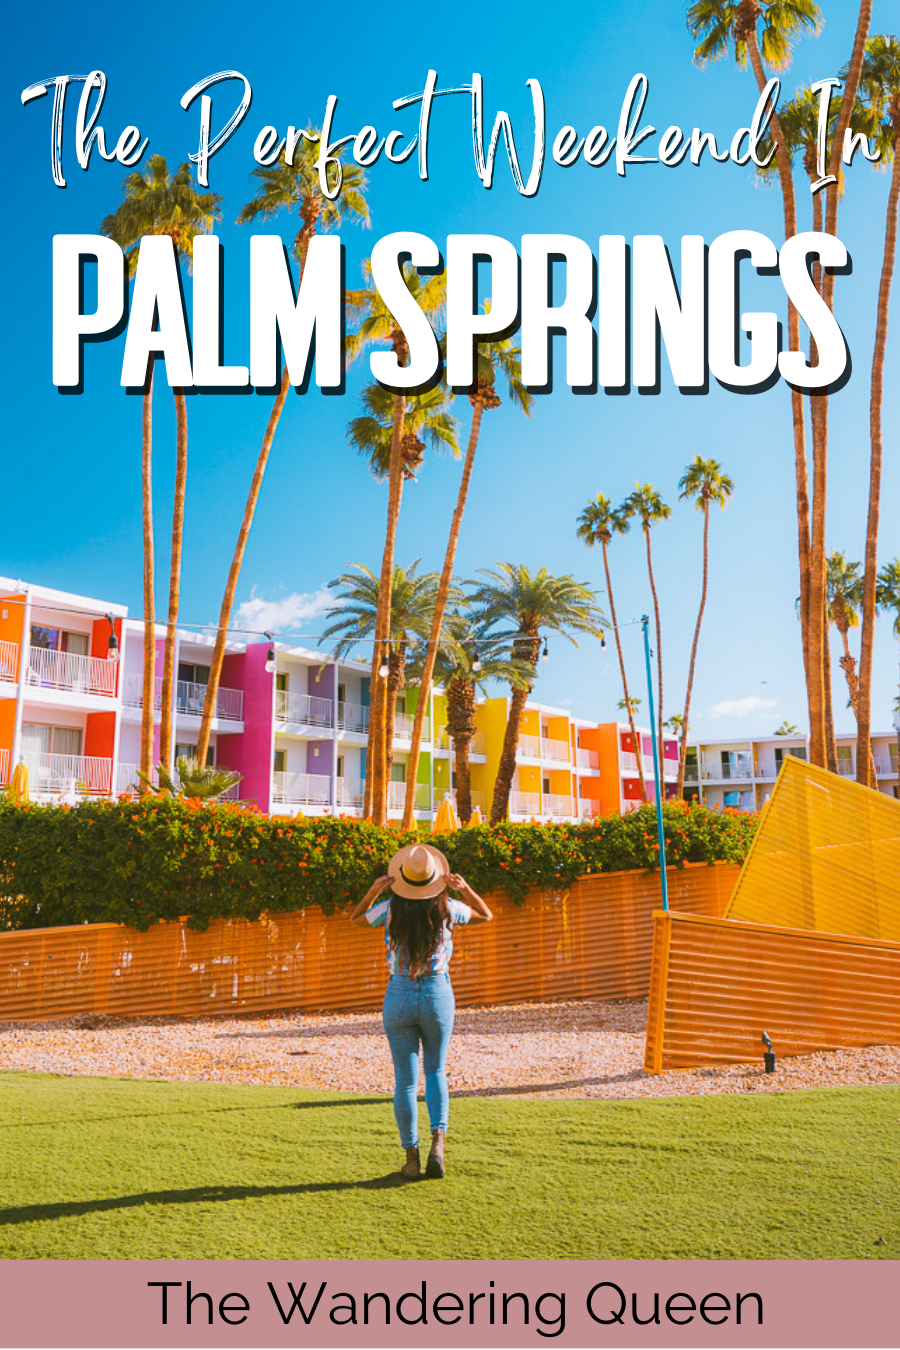 10 Mini Palm Springs backpack ideas